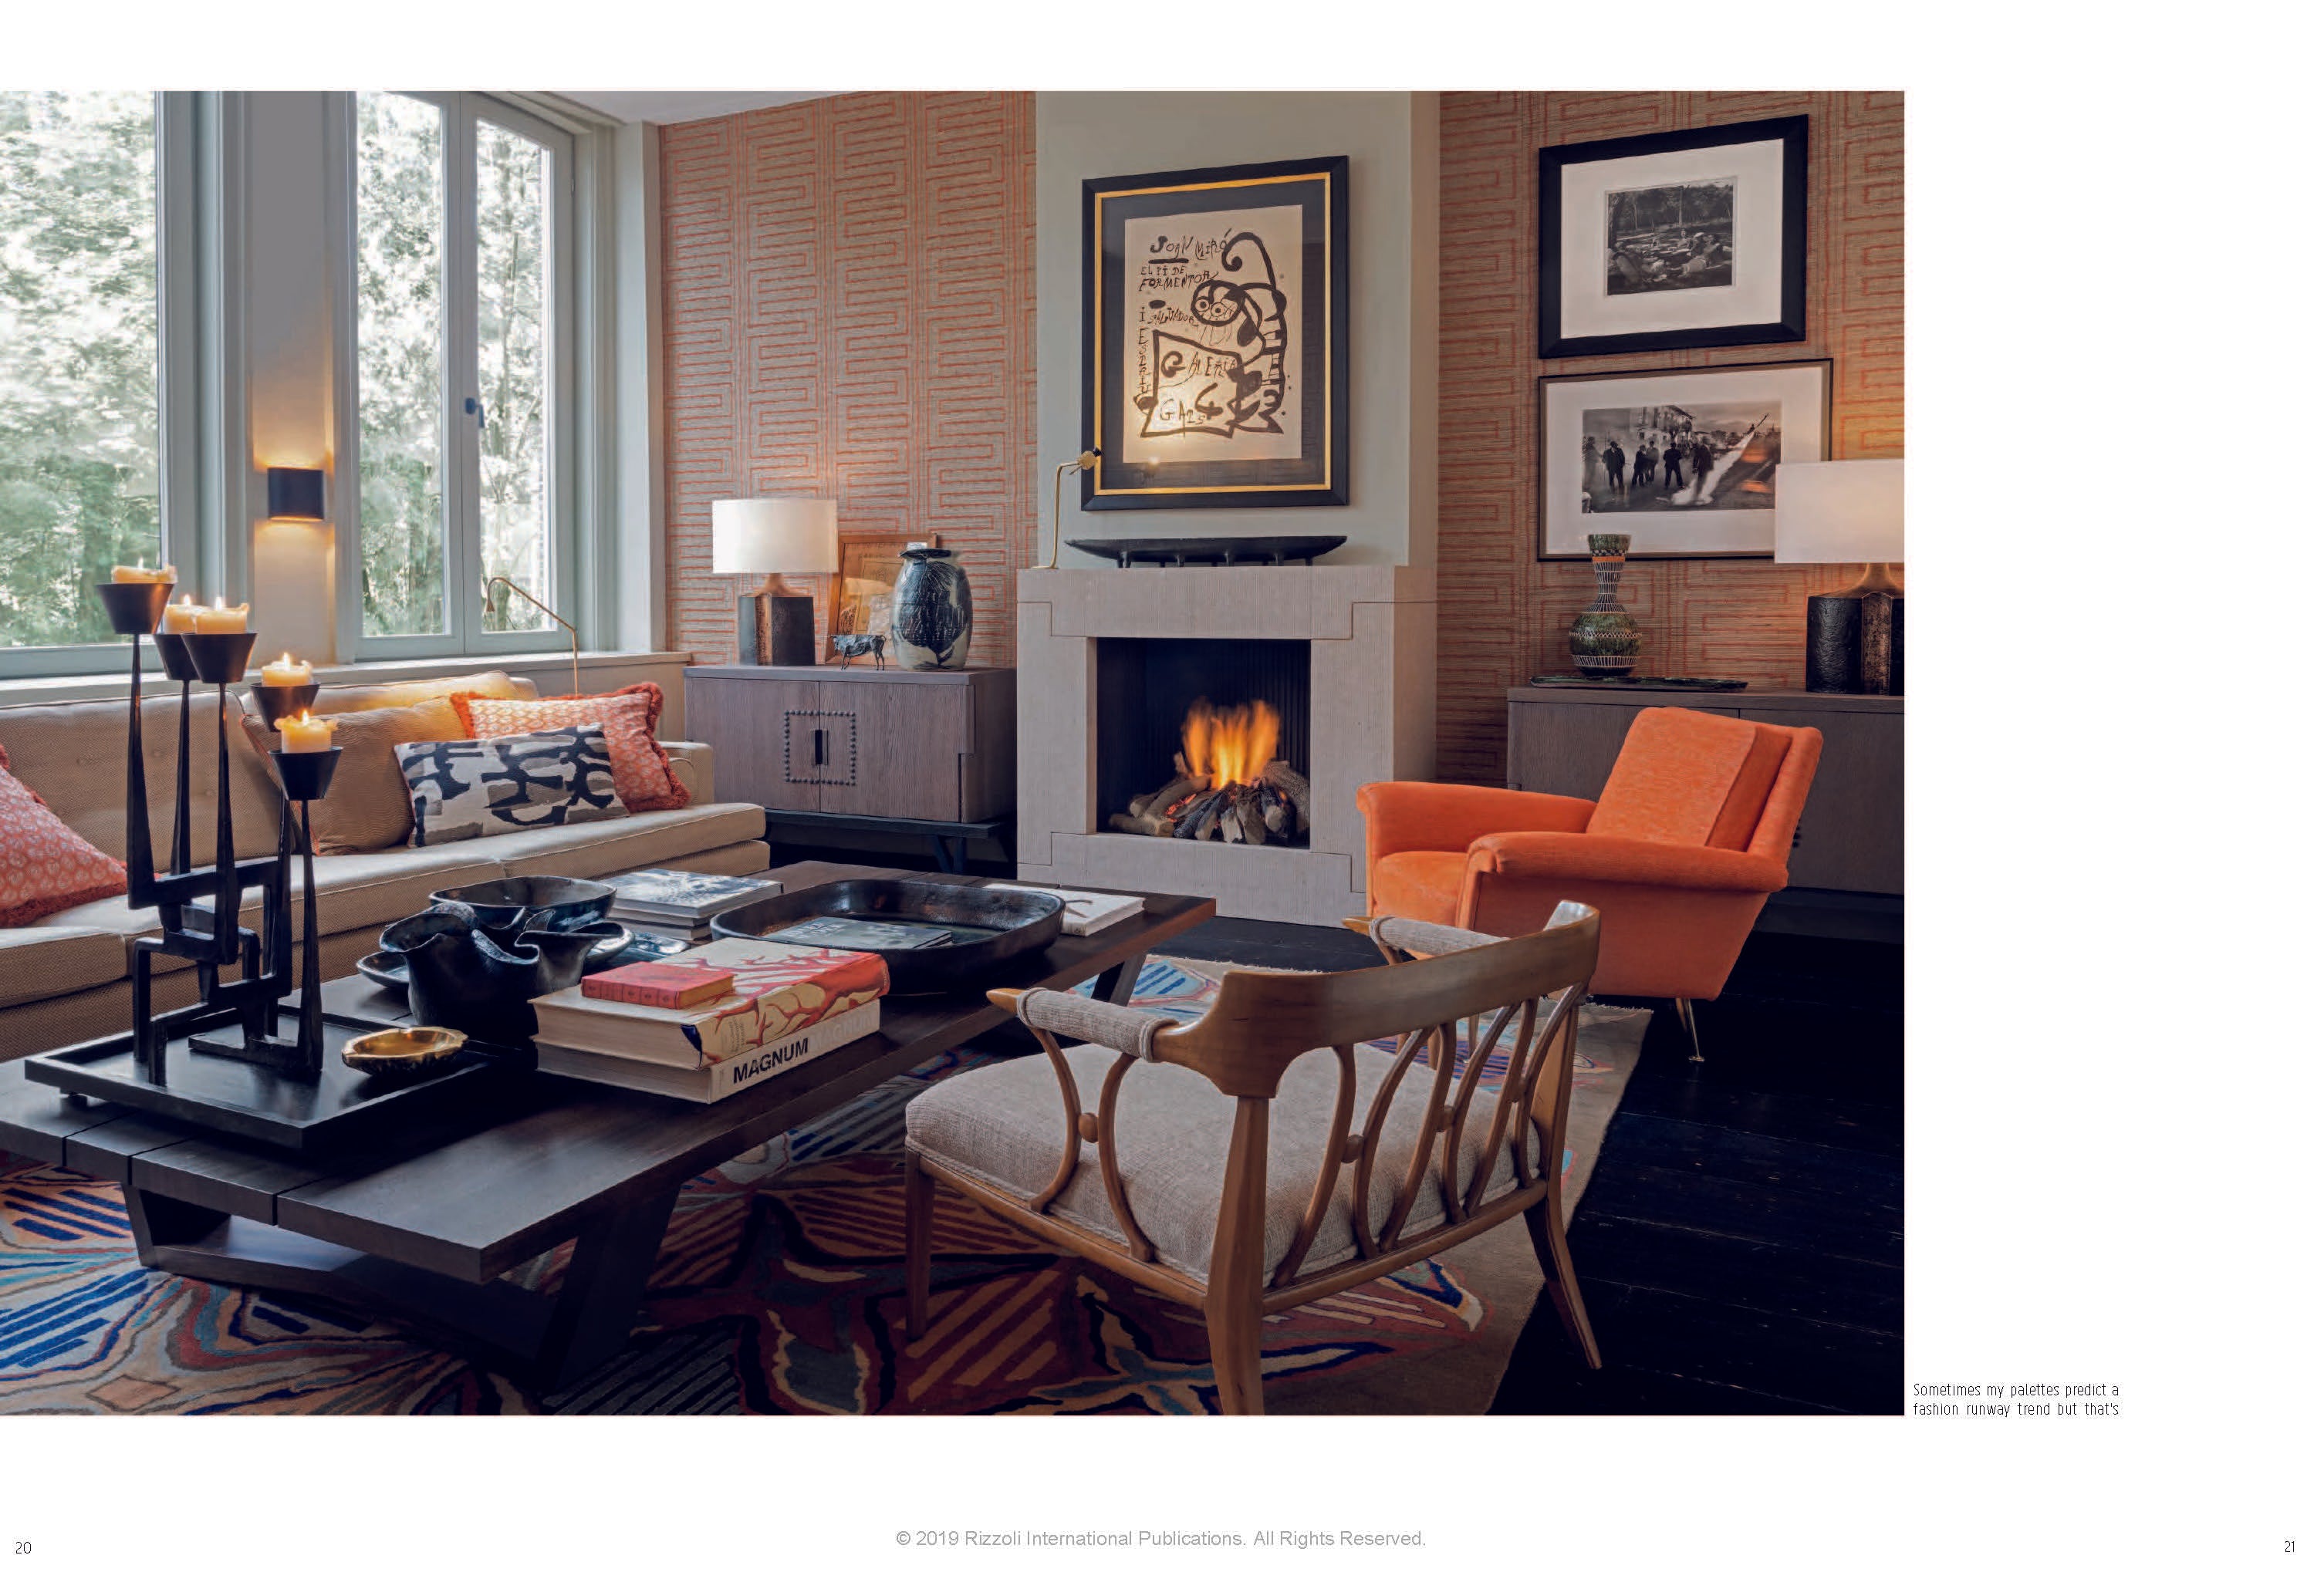 Elan: The Interior Design of Kate Hume